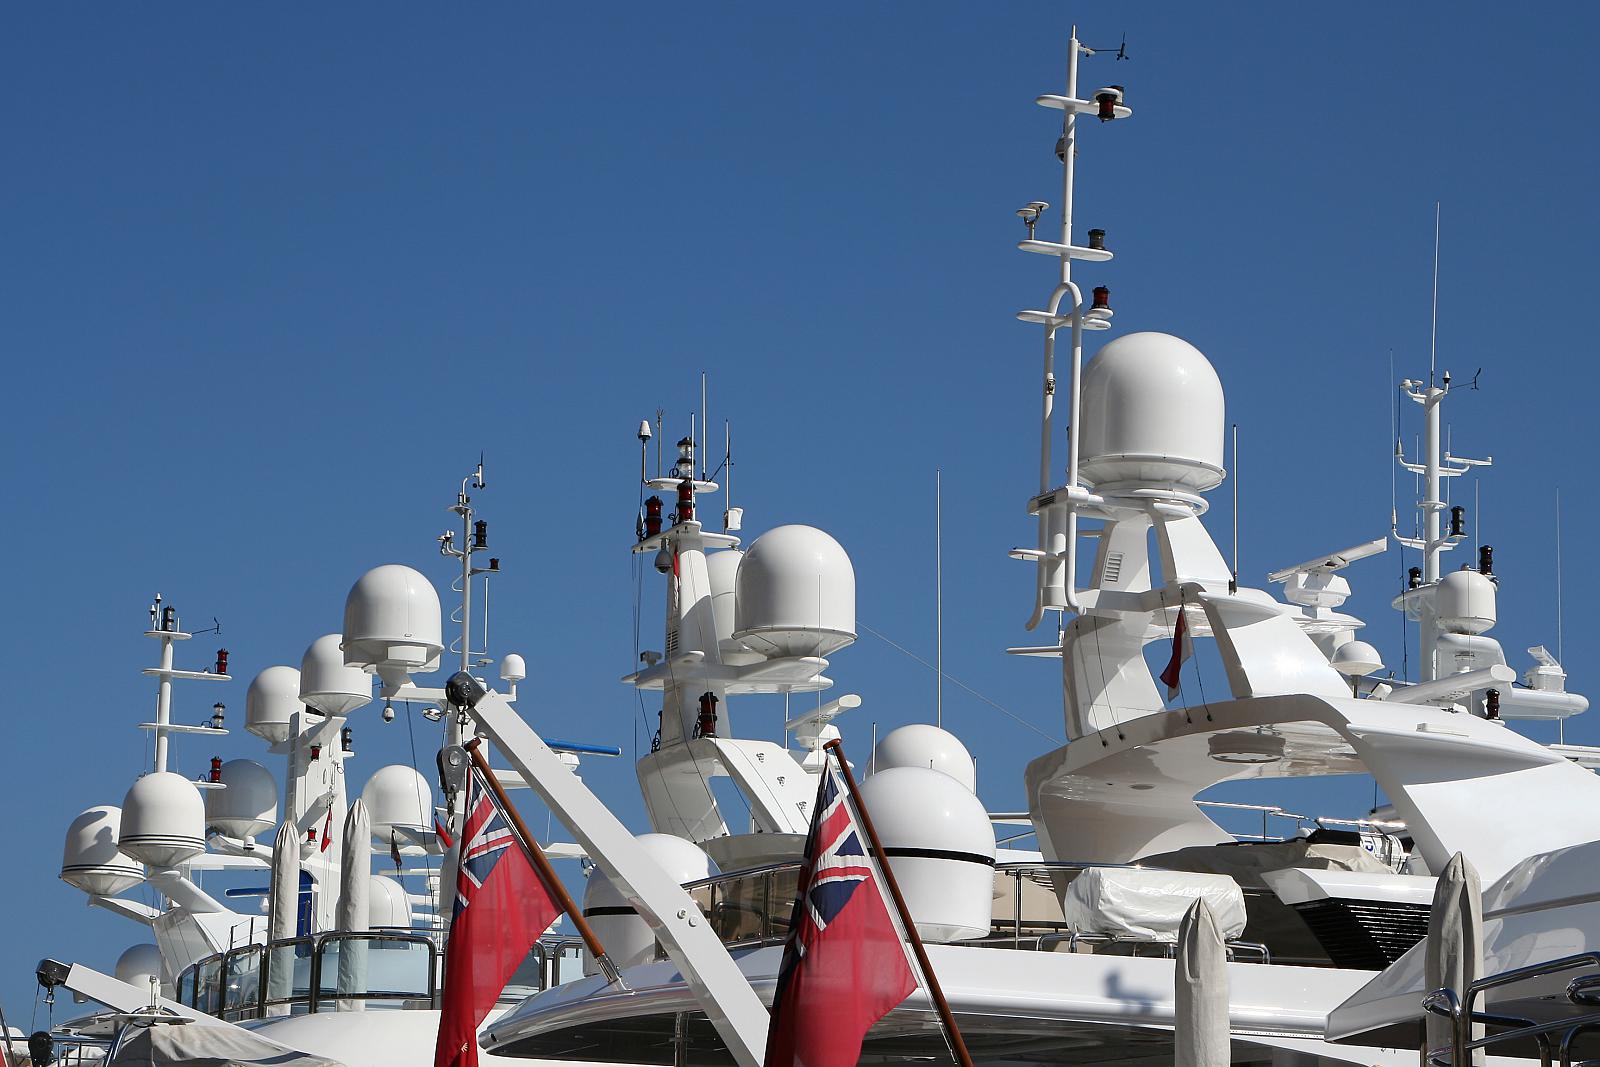 Motor yacht radar and electronic equipment